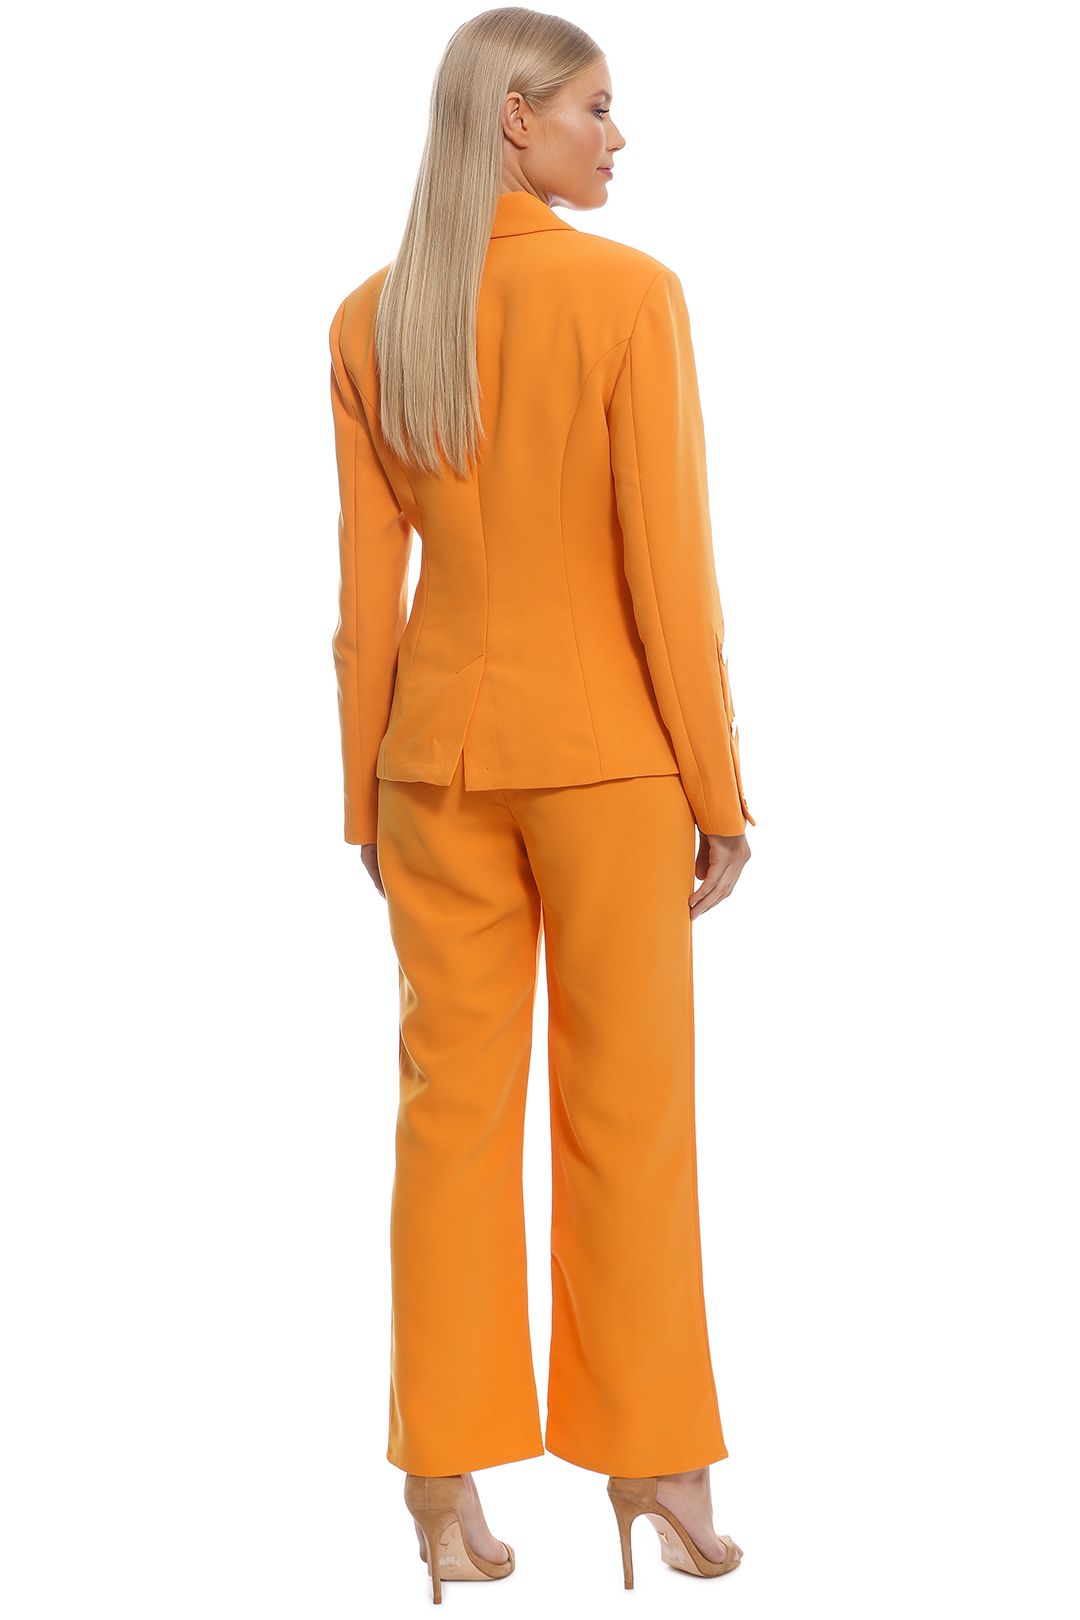 Keepsake The Label - Follower Blazer and Pant Set - Orange - Back